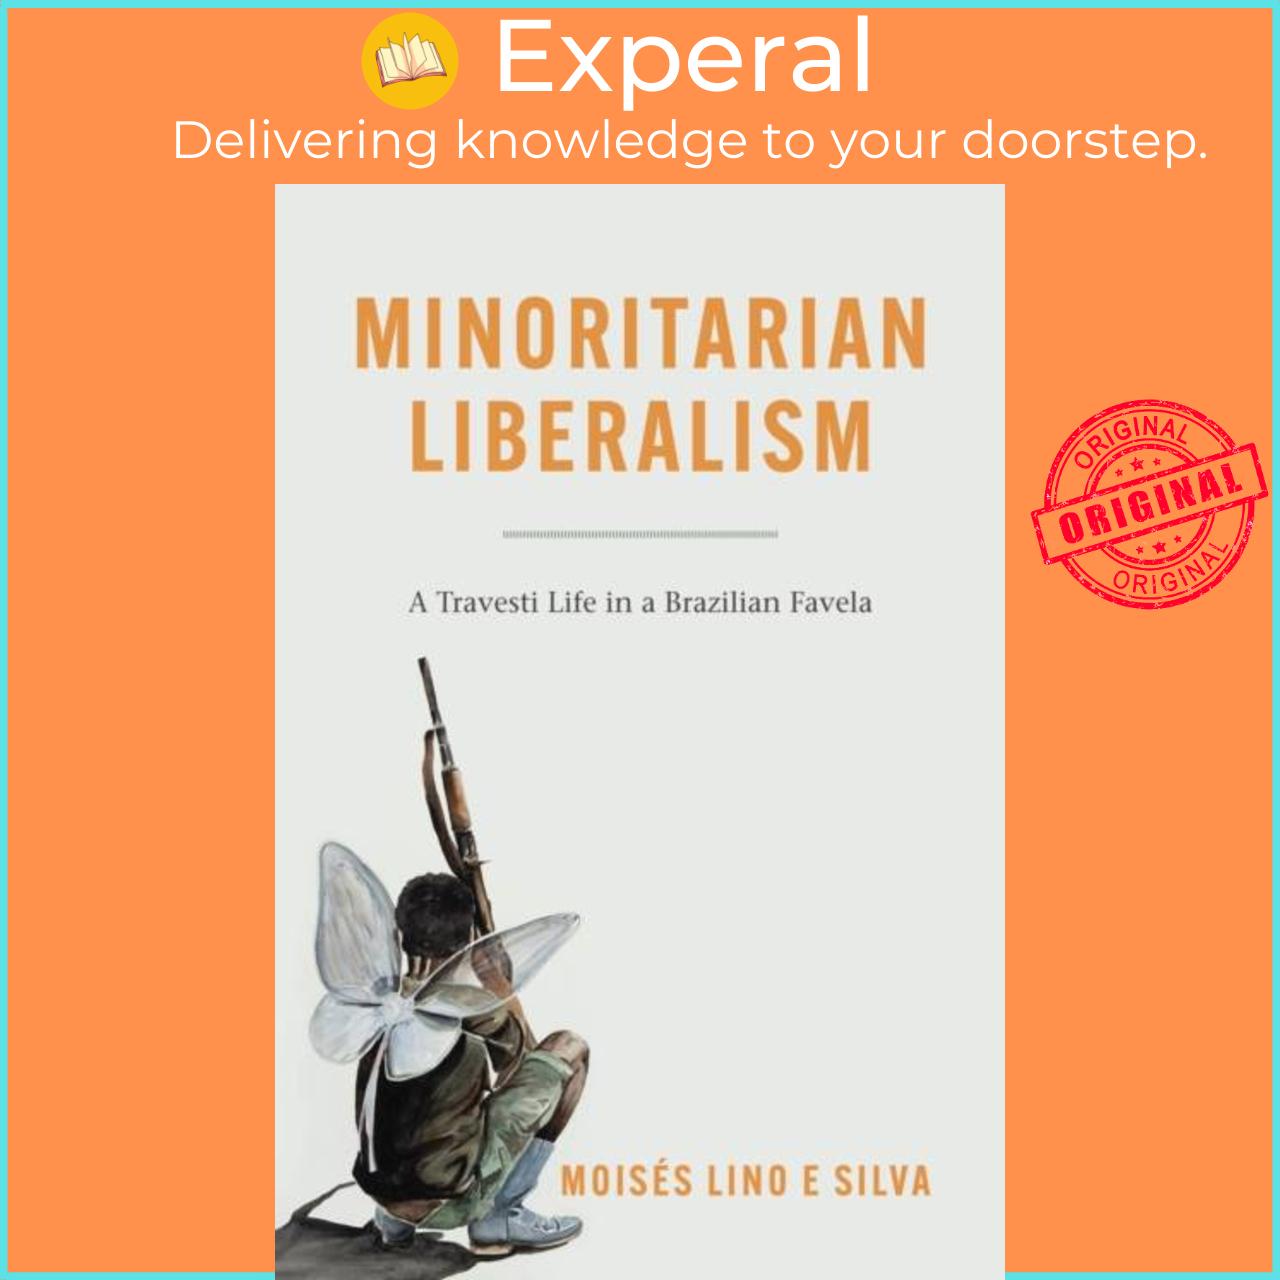 Sách - Minoritarian Liberalism - A Travesti Life in a Brazilian Favela by Moises Lino e Silva (UK edition, paperback)